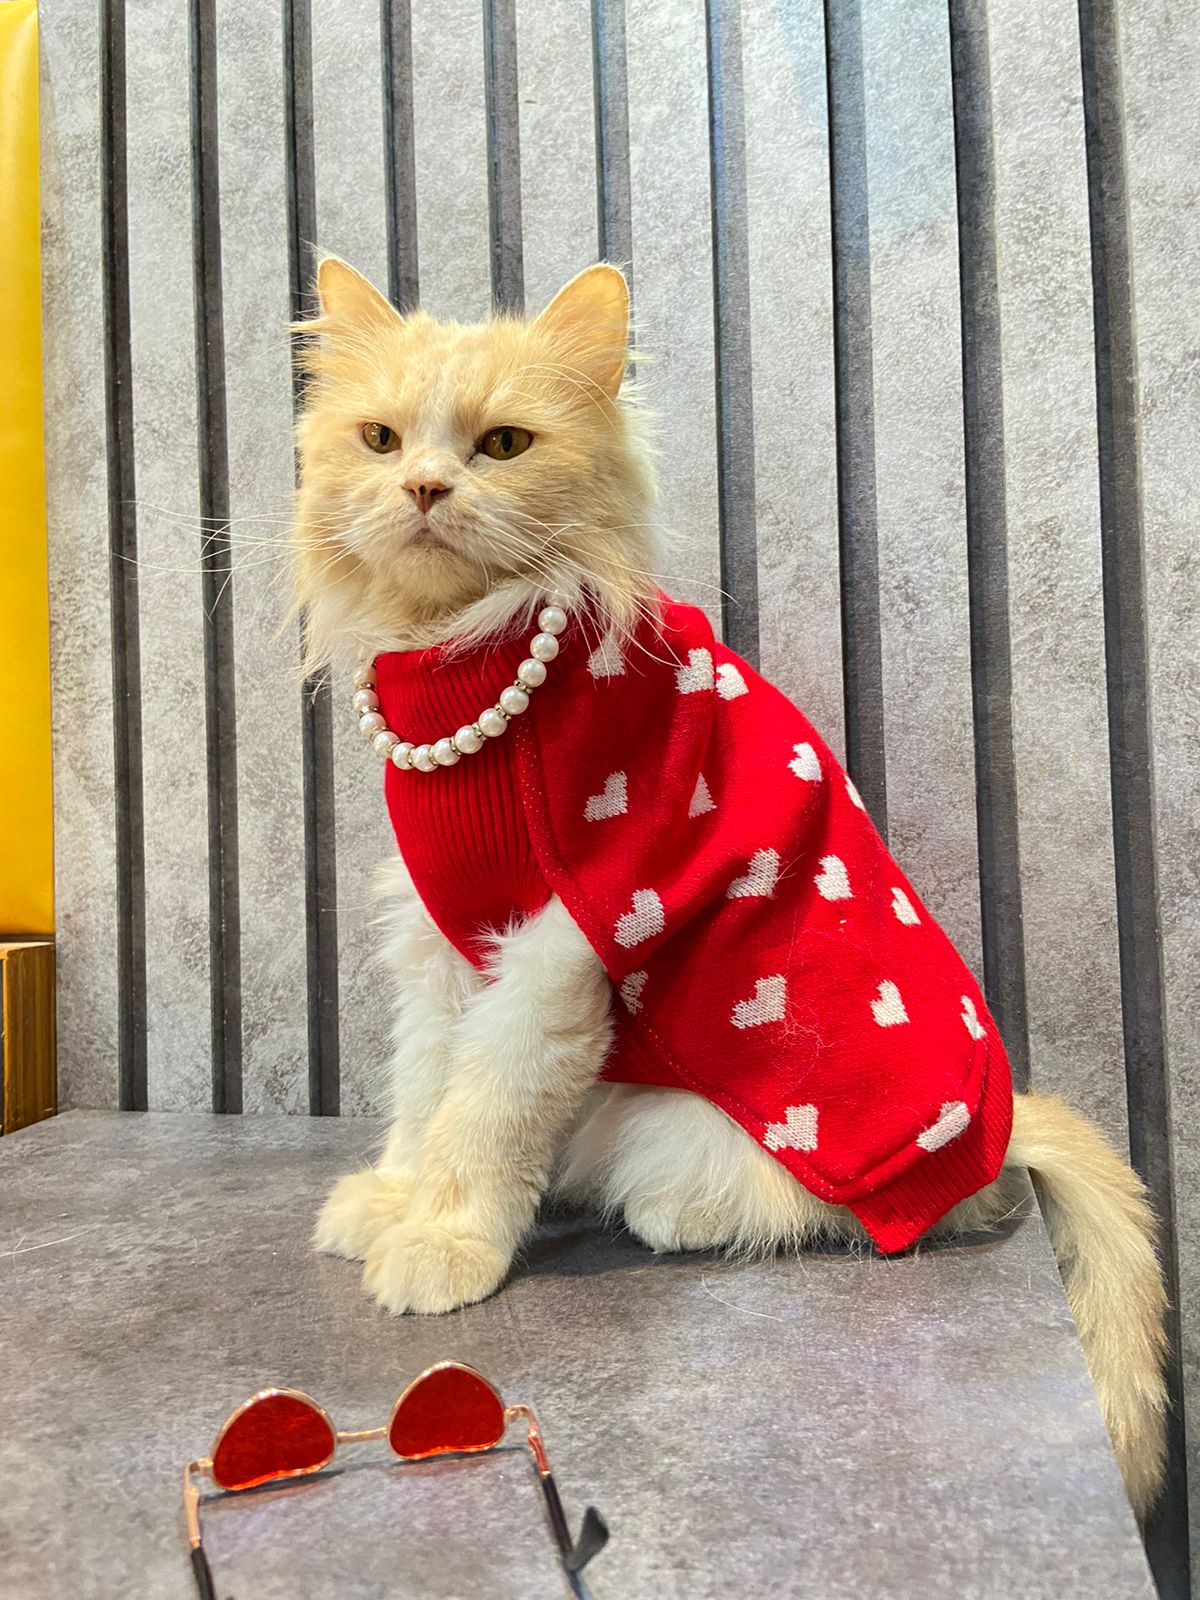 Petsnugs Red Heart Sweater